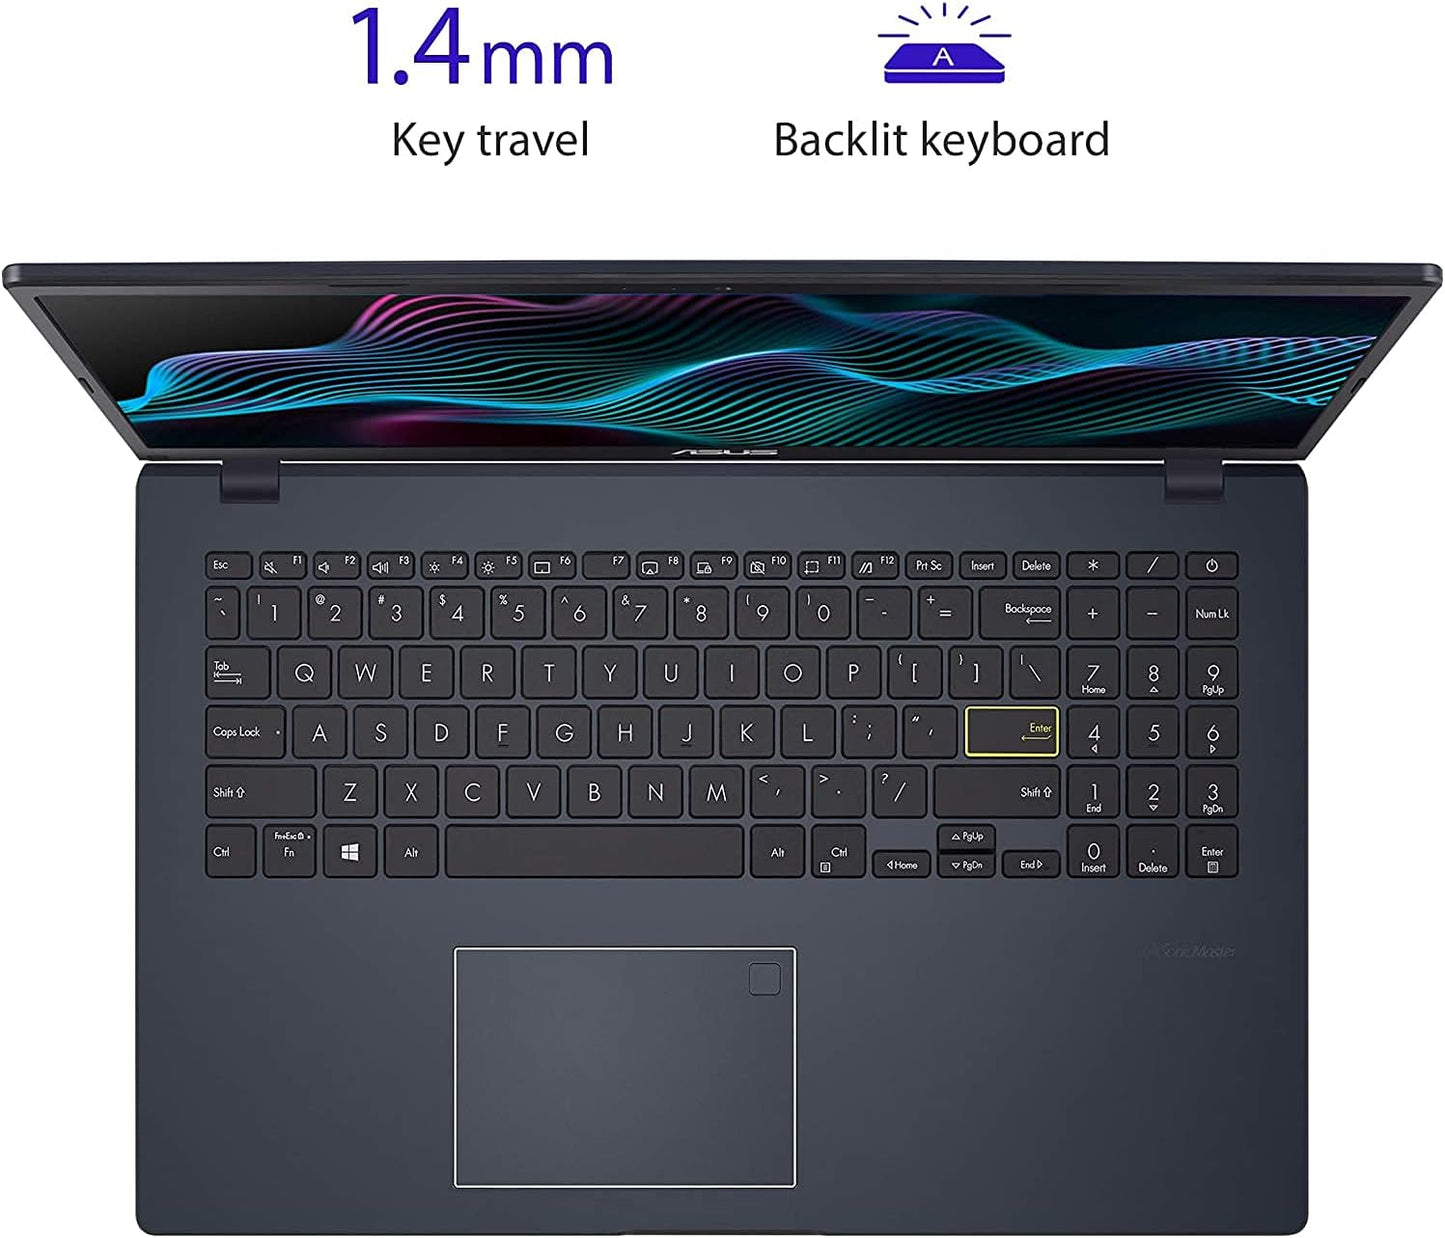 2022  L510 Ultra Thin Laptop, 15.6" FHD Display, Intel Celeron N4020 Processor, 4GB RAM, 256 GB Storage, 8Hrs+ Battery Life, Backlit Keyboard, Windows 10 Home + 1 Year Microsoft 365, Star Black